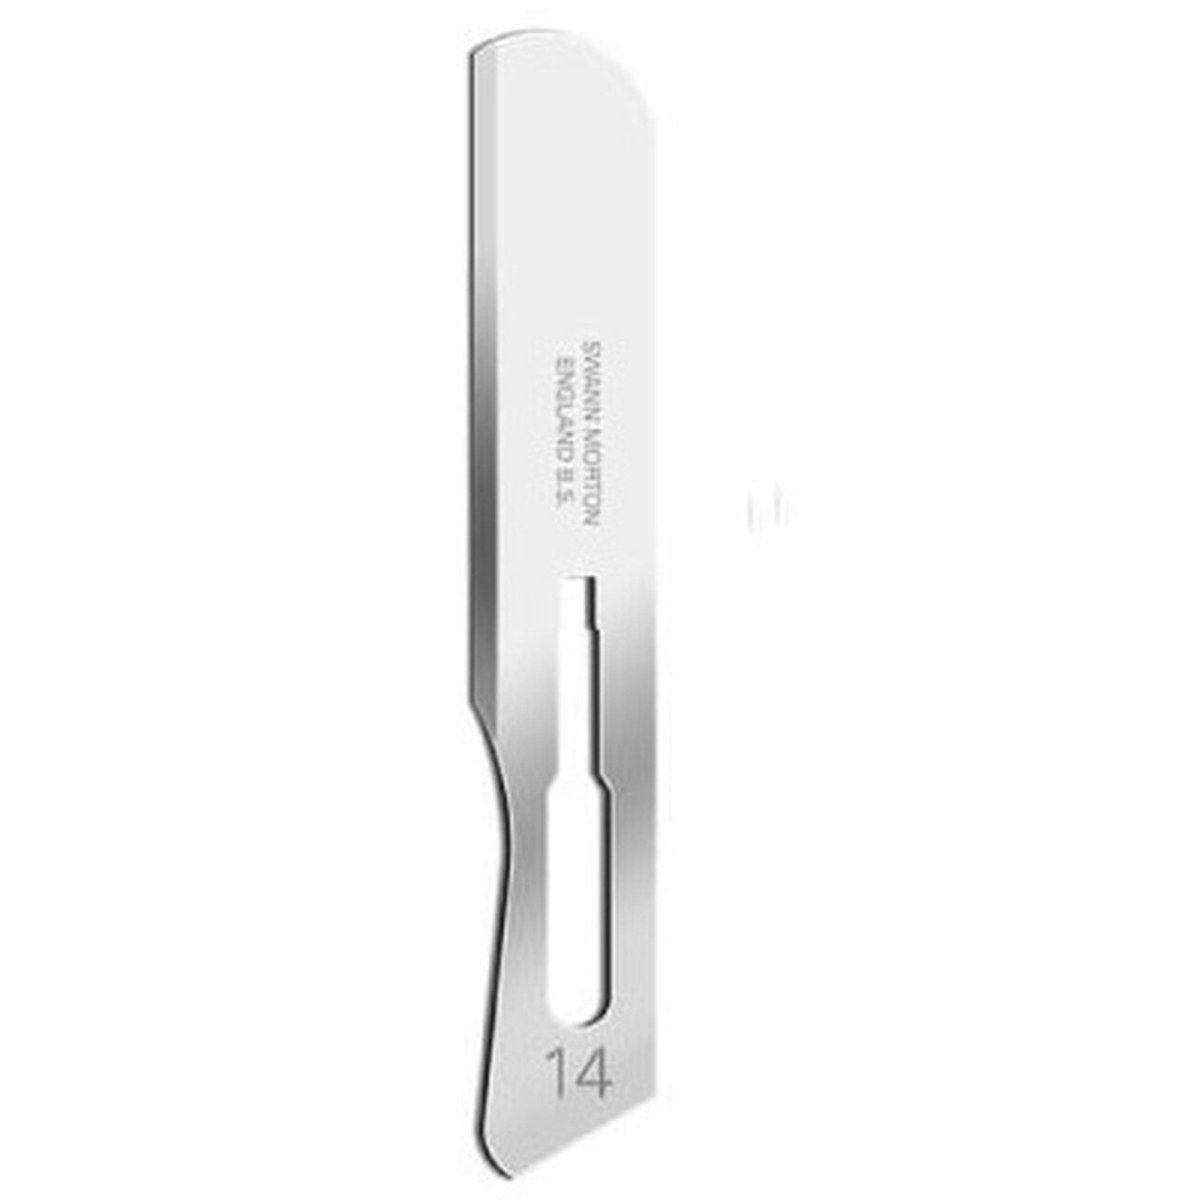 #14 Swann Morton Dermaplaning Blade | Stainless Steel - Pkg of 25 Canada